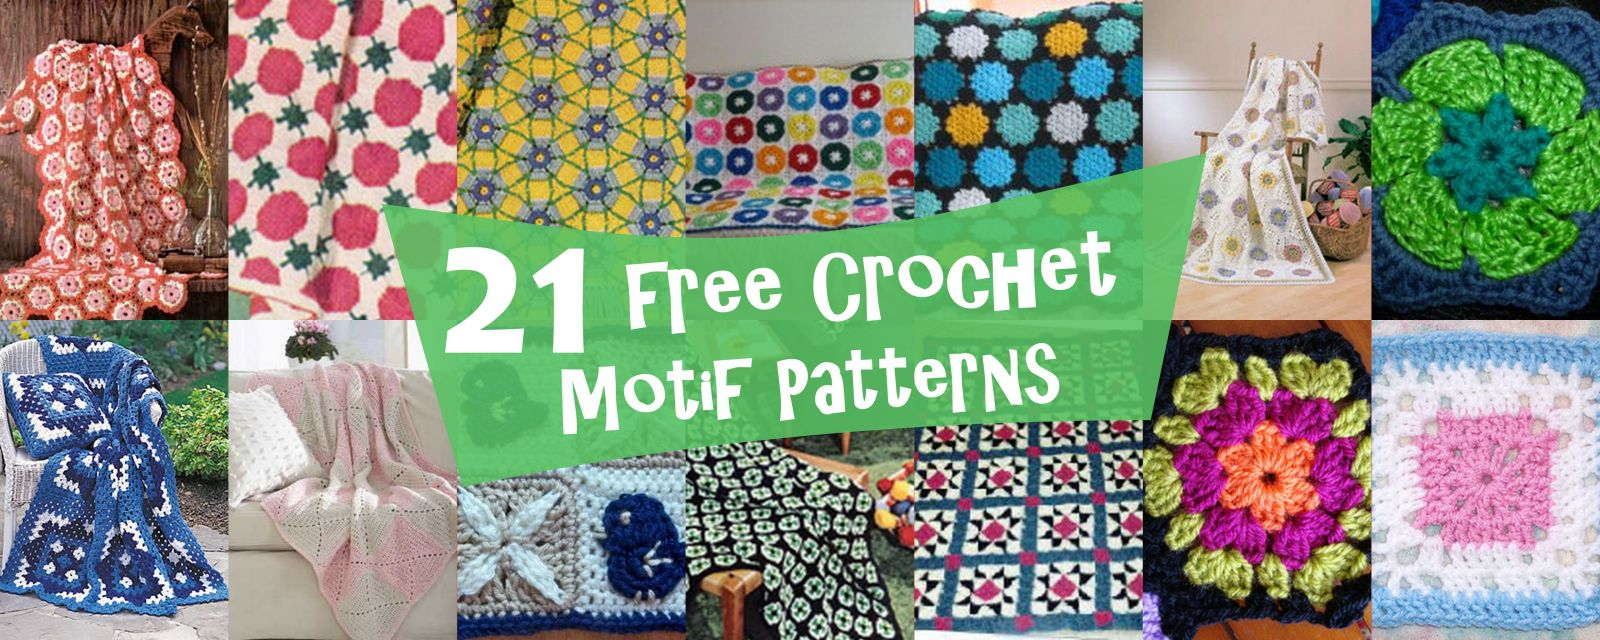 Motif Patterns Crochet 21 Free Crochet Motif Patterns Allfreecrochetafghanpatterns